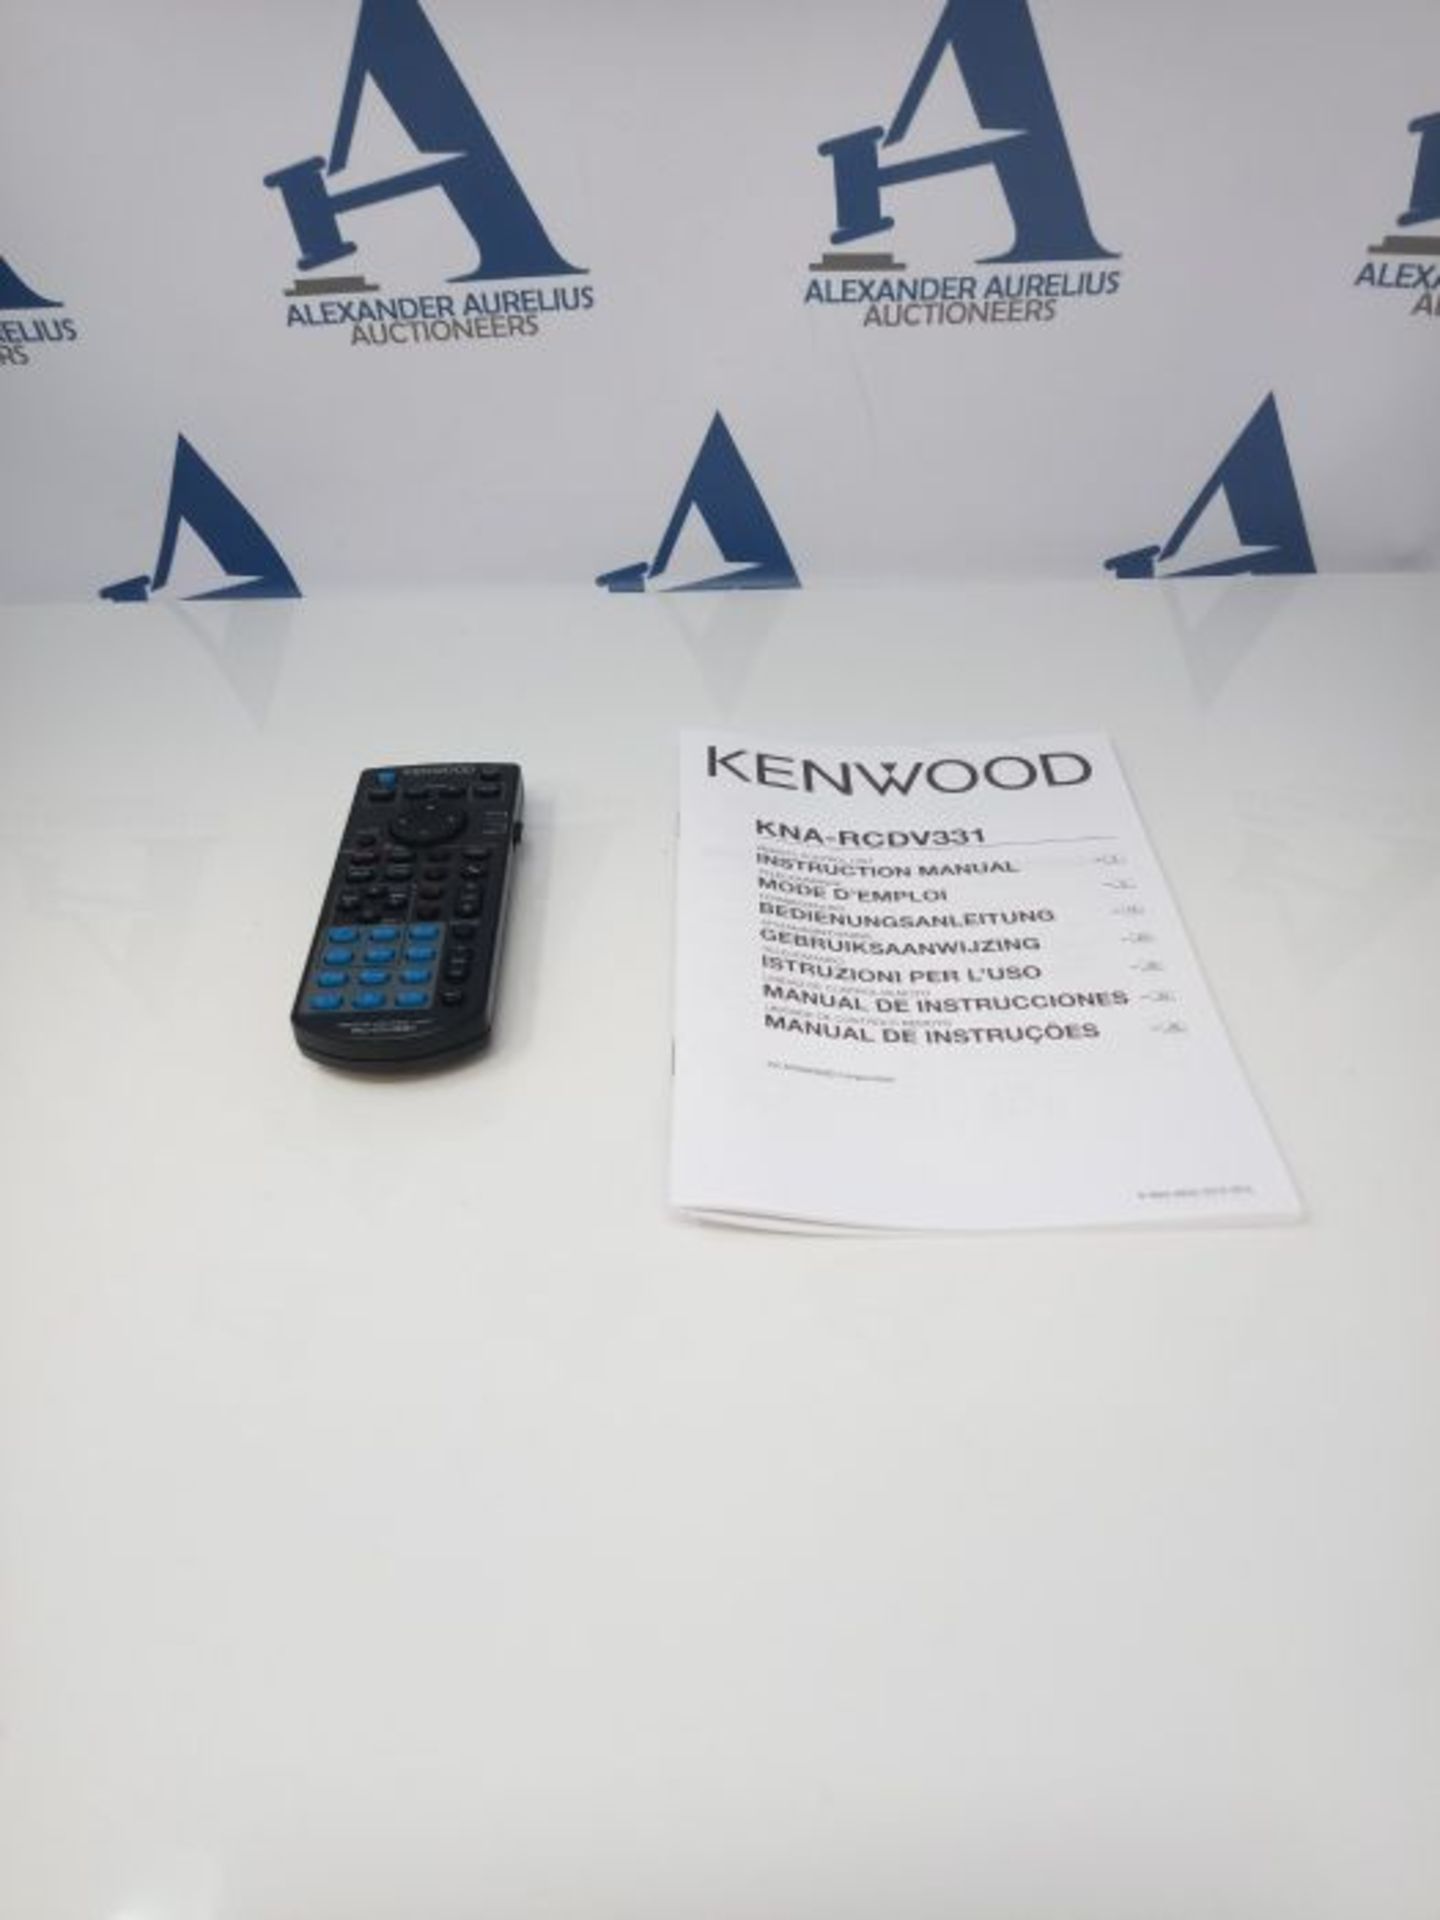 Kenwood KNA-RCDV 331 IR Remote Control Black - Image 2 of 2